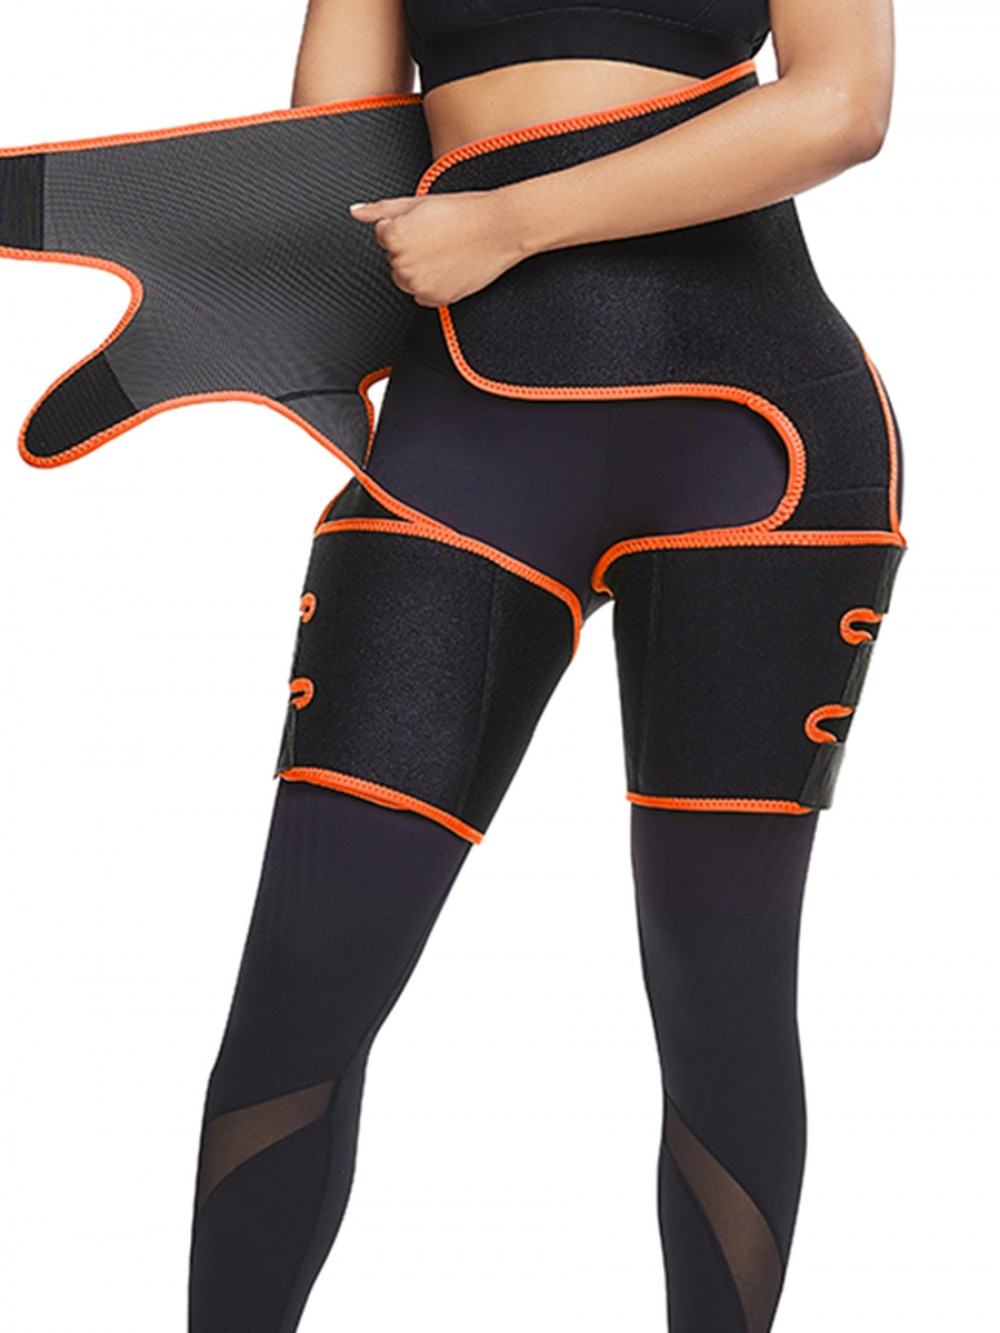 Orange Sticker High Waist Neoprene Thigh Shaper For Weight Loss